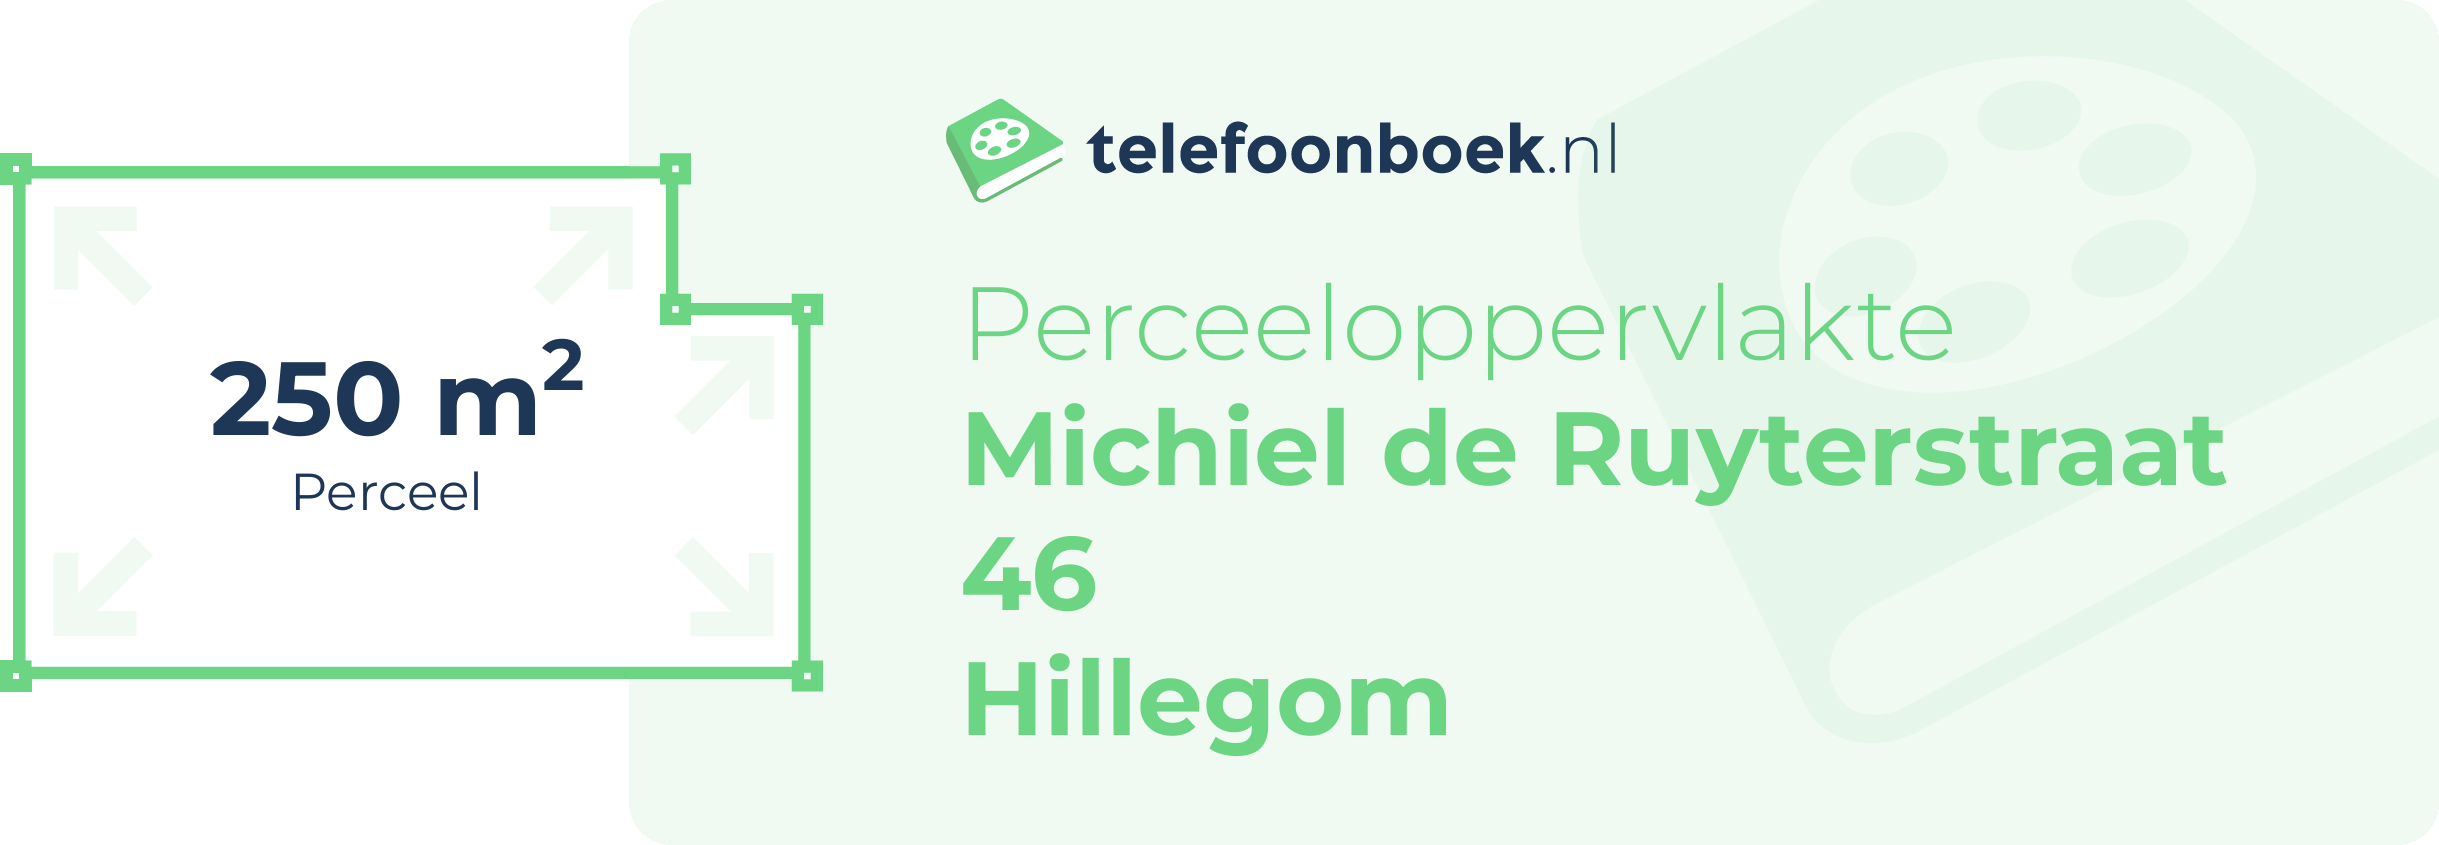 Perceeloppervlakte Michiel De Ruyterstraat 46 Hillegom